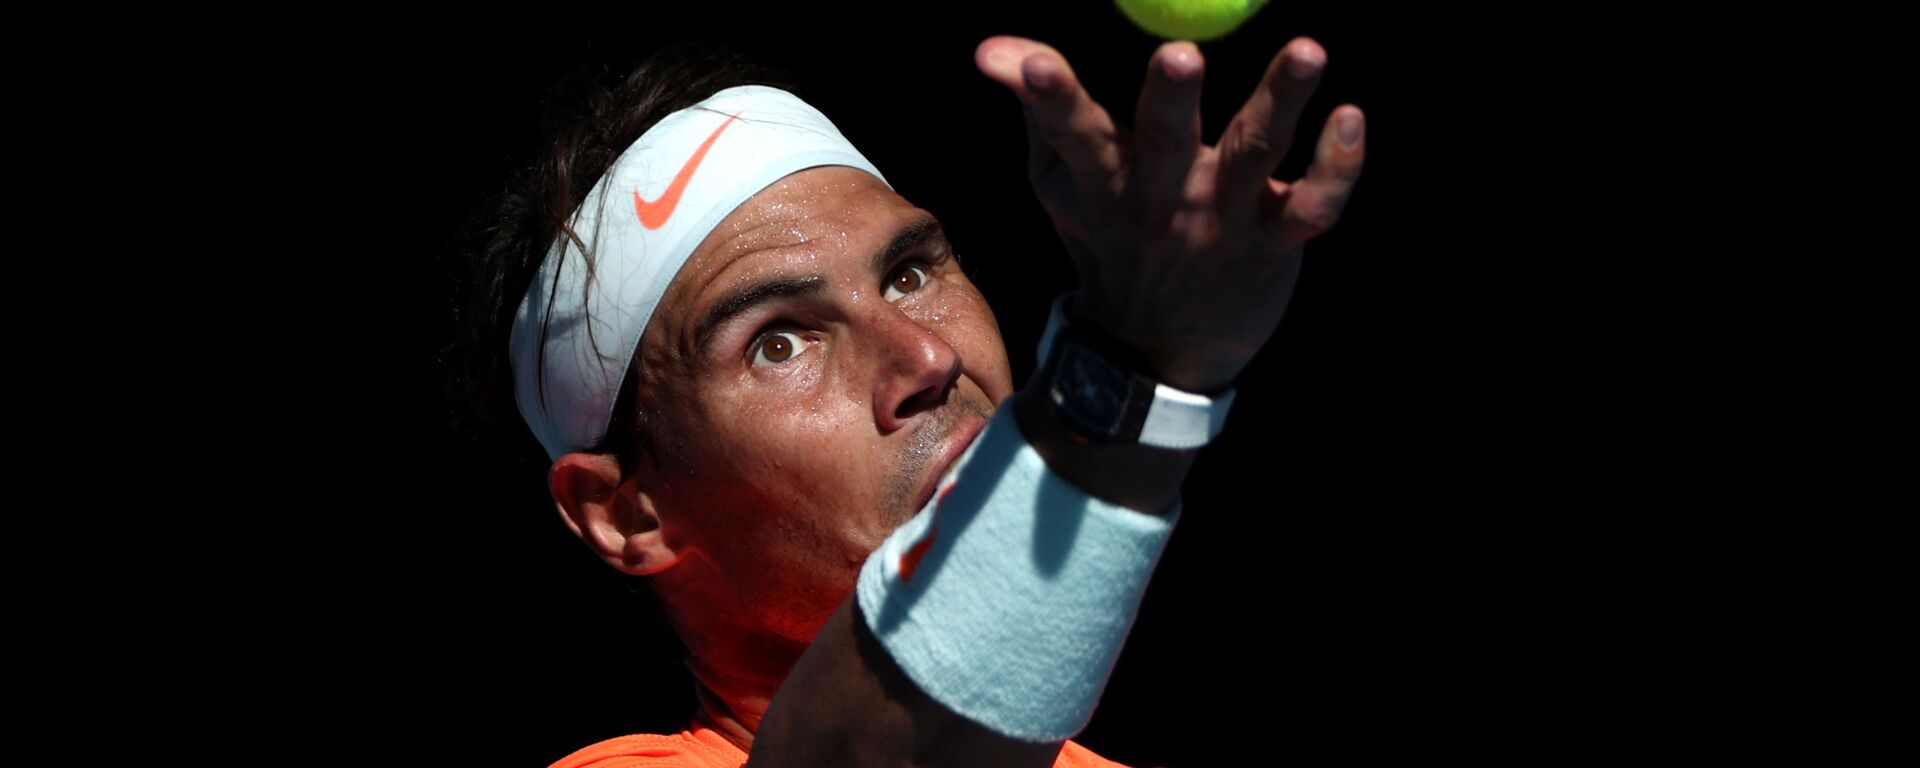 El tenista Rafael Nadal en Melbourne (Australia) - Sputnik Mundo, 1920, 09.02.2021